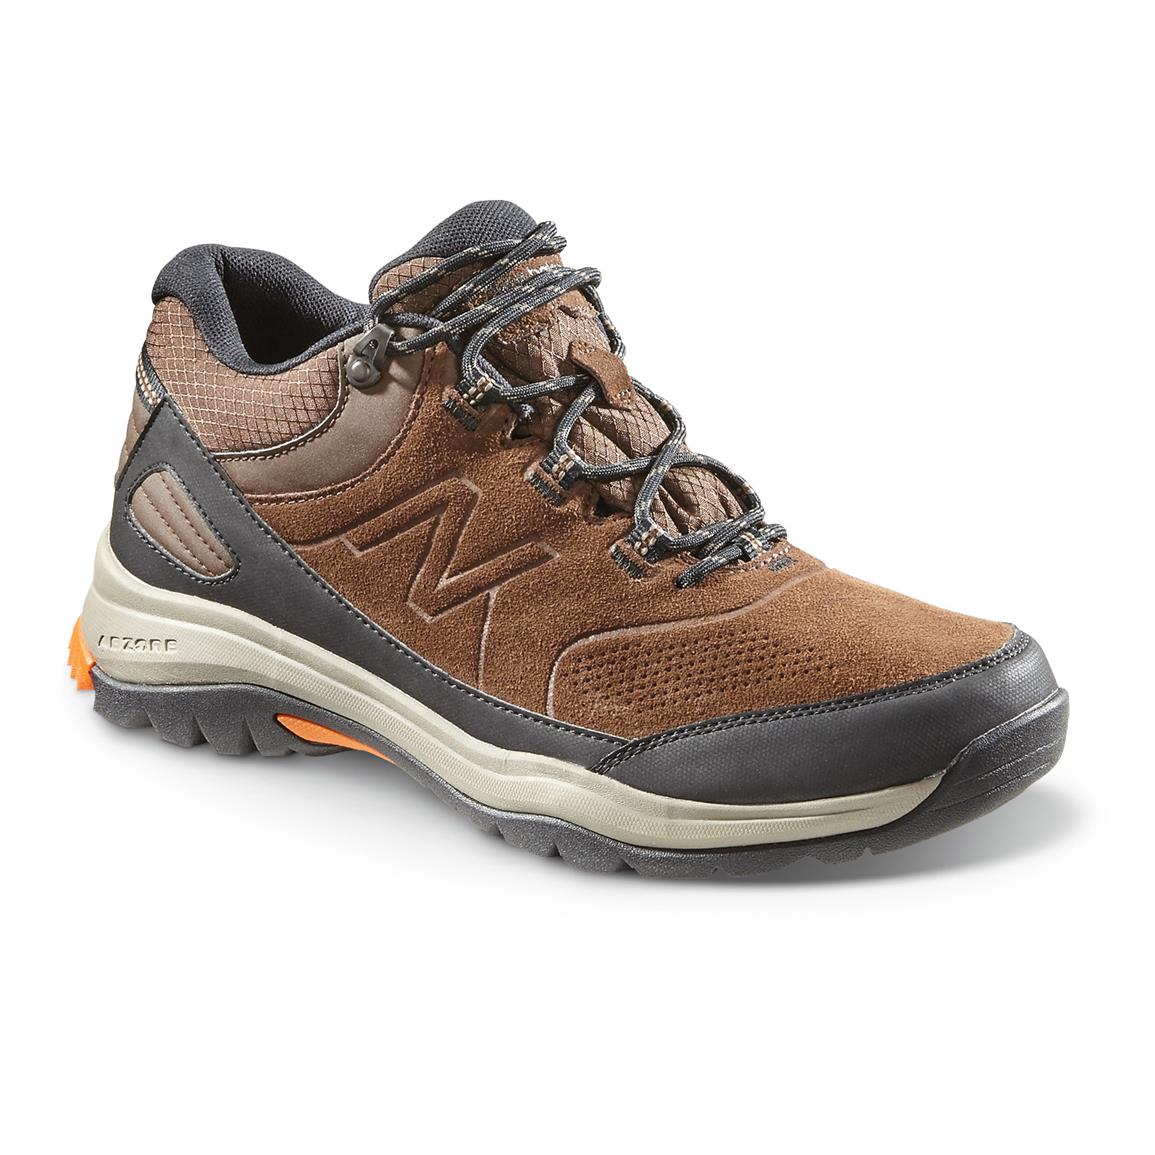 New Balance Men\u0027s 779v1 Hiking Shoes, Brown